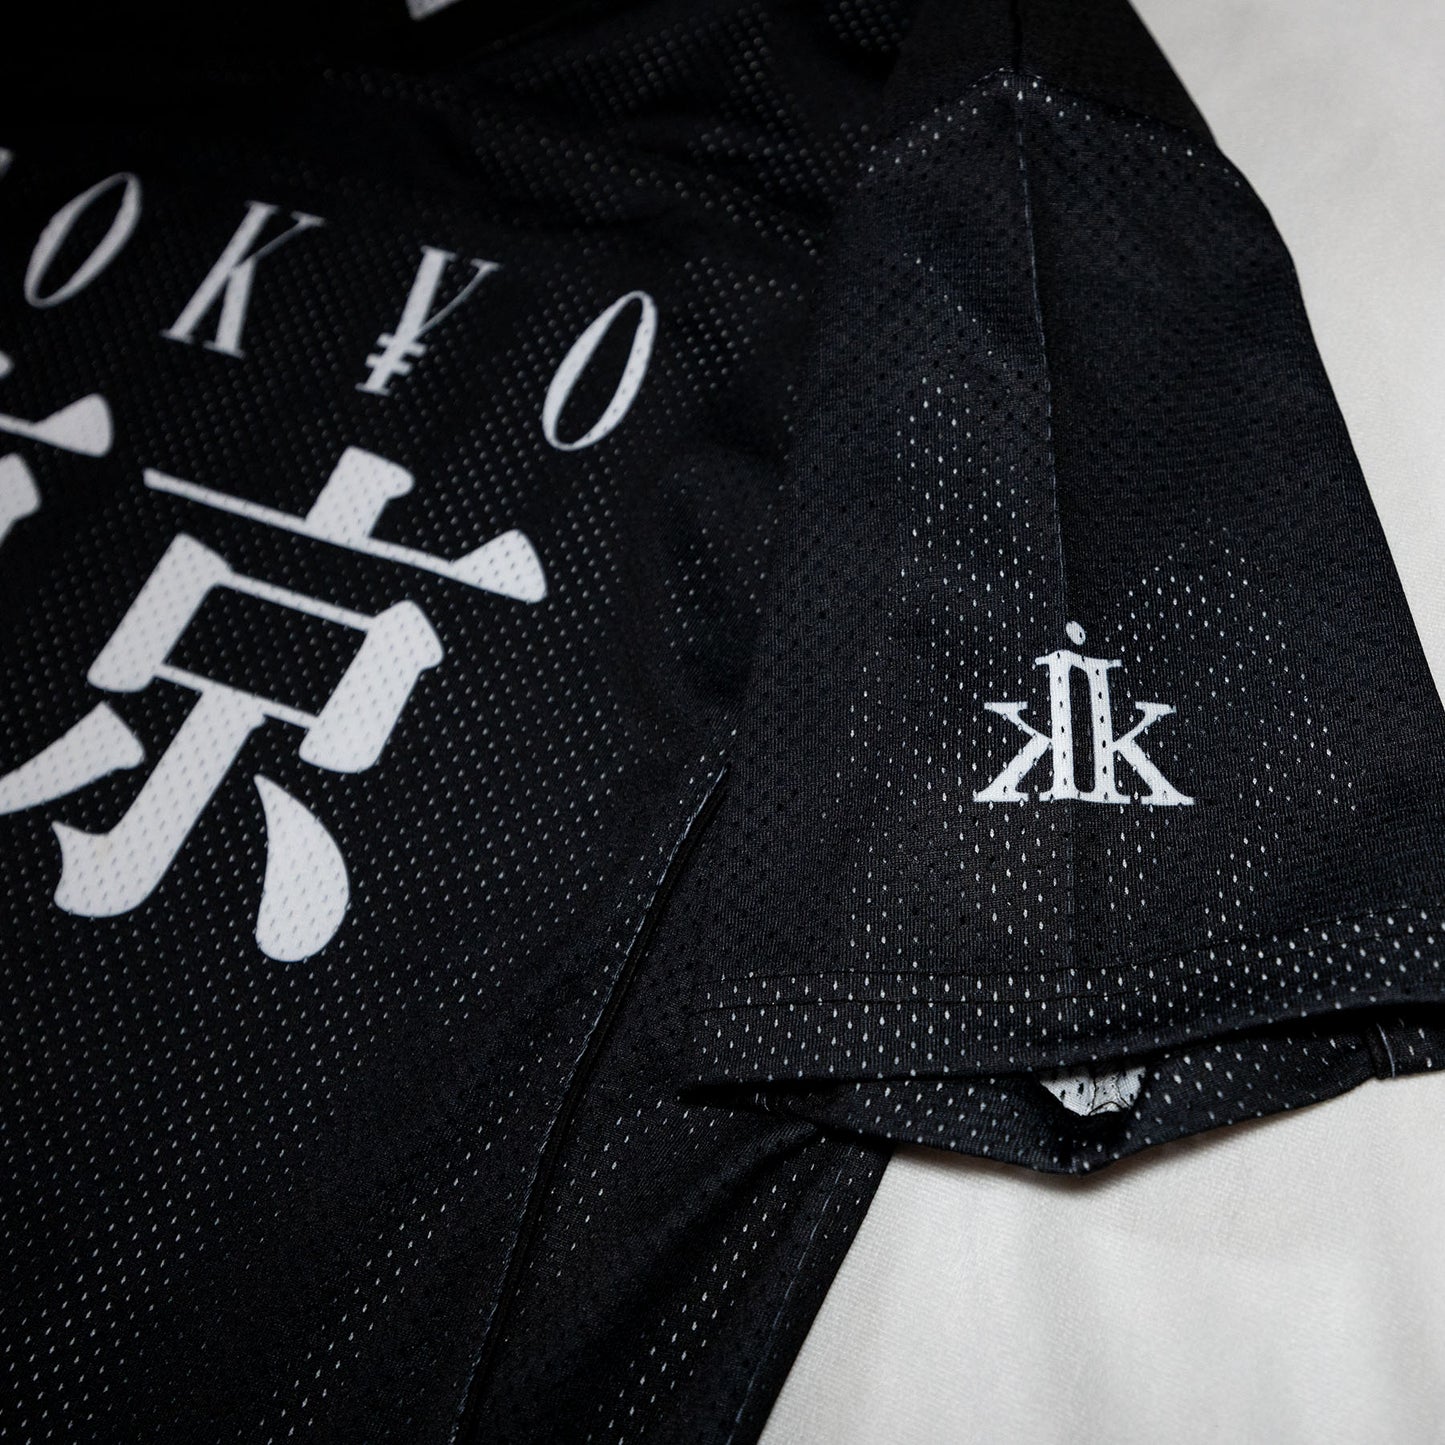 TOK¥O・JPN Tour Football Jersey / Black - IKendoit.Shop